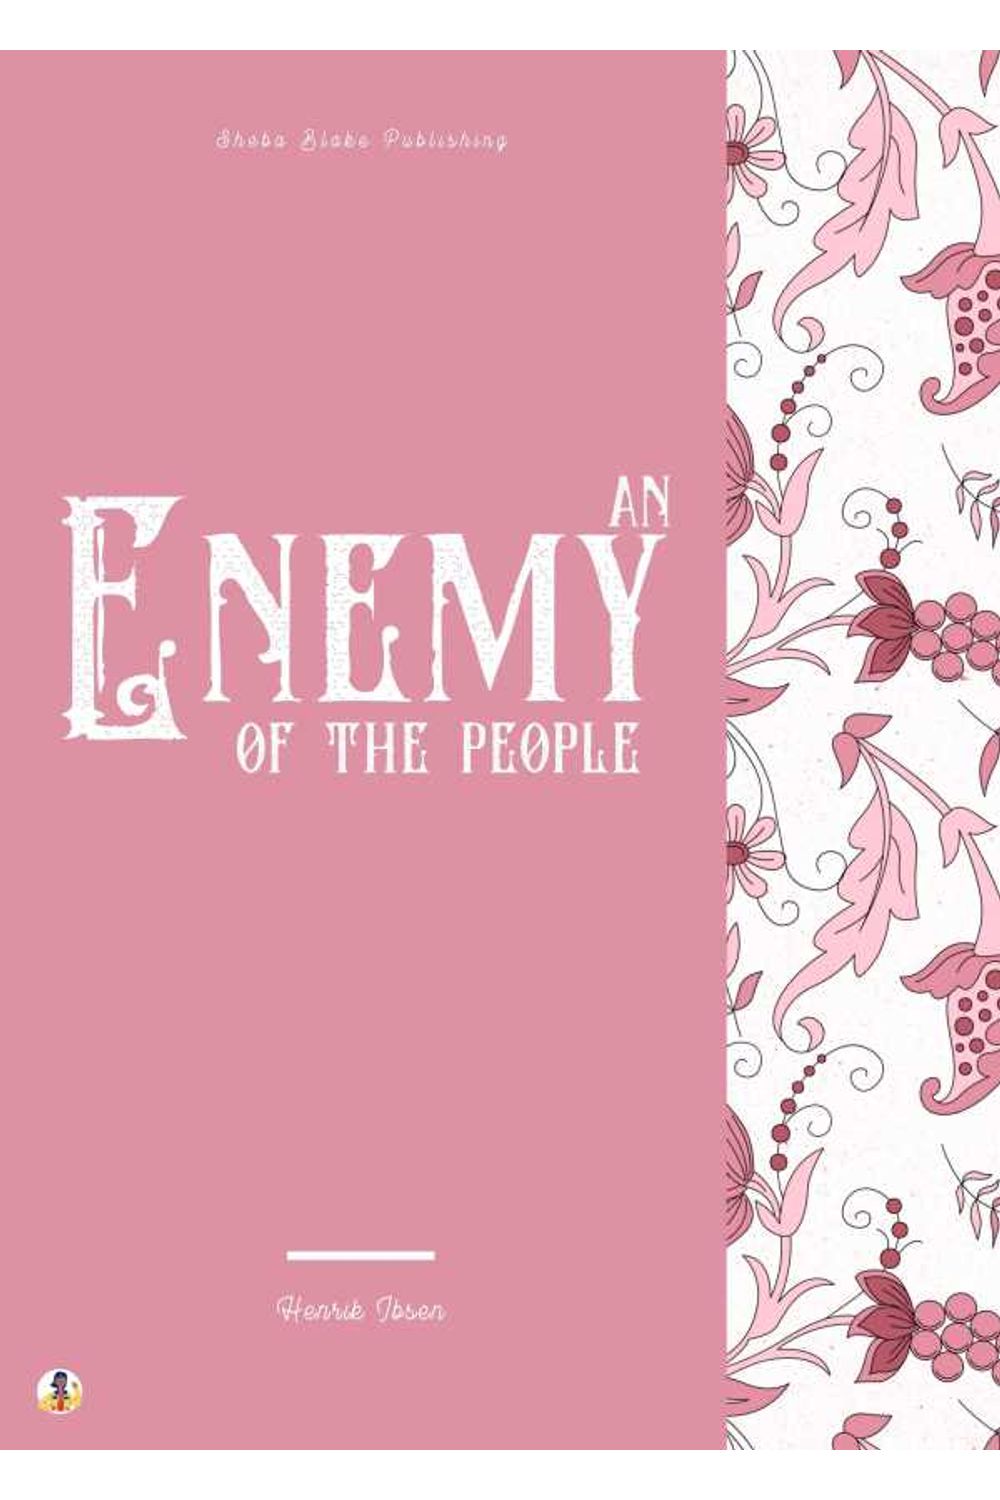 bw-an-enemy-of-the-people-sheba-blake-publishing-9783986771560